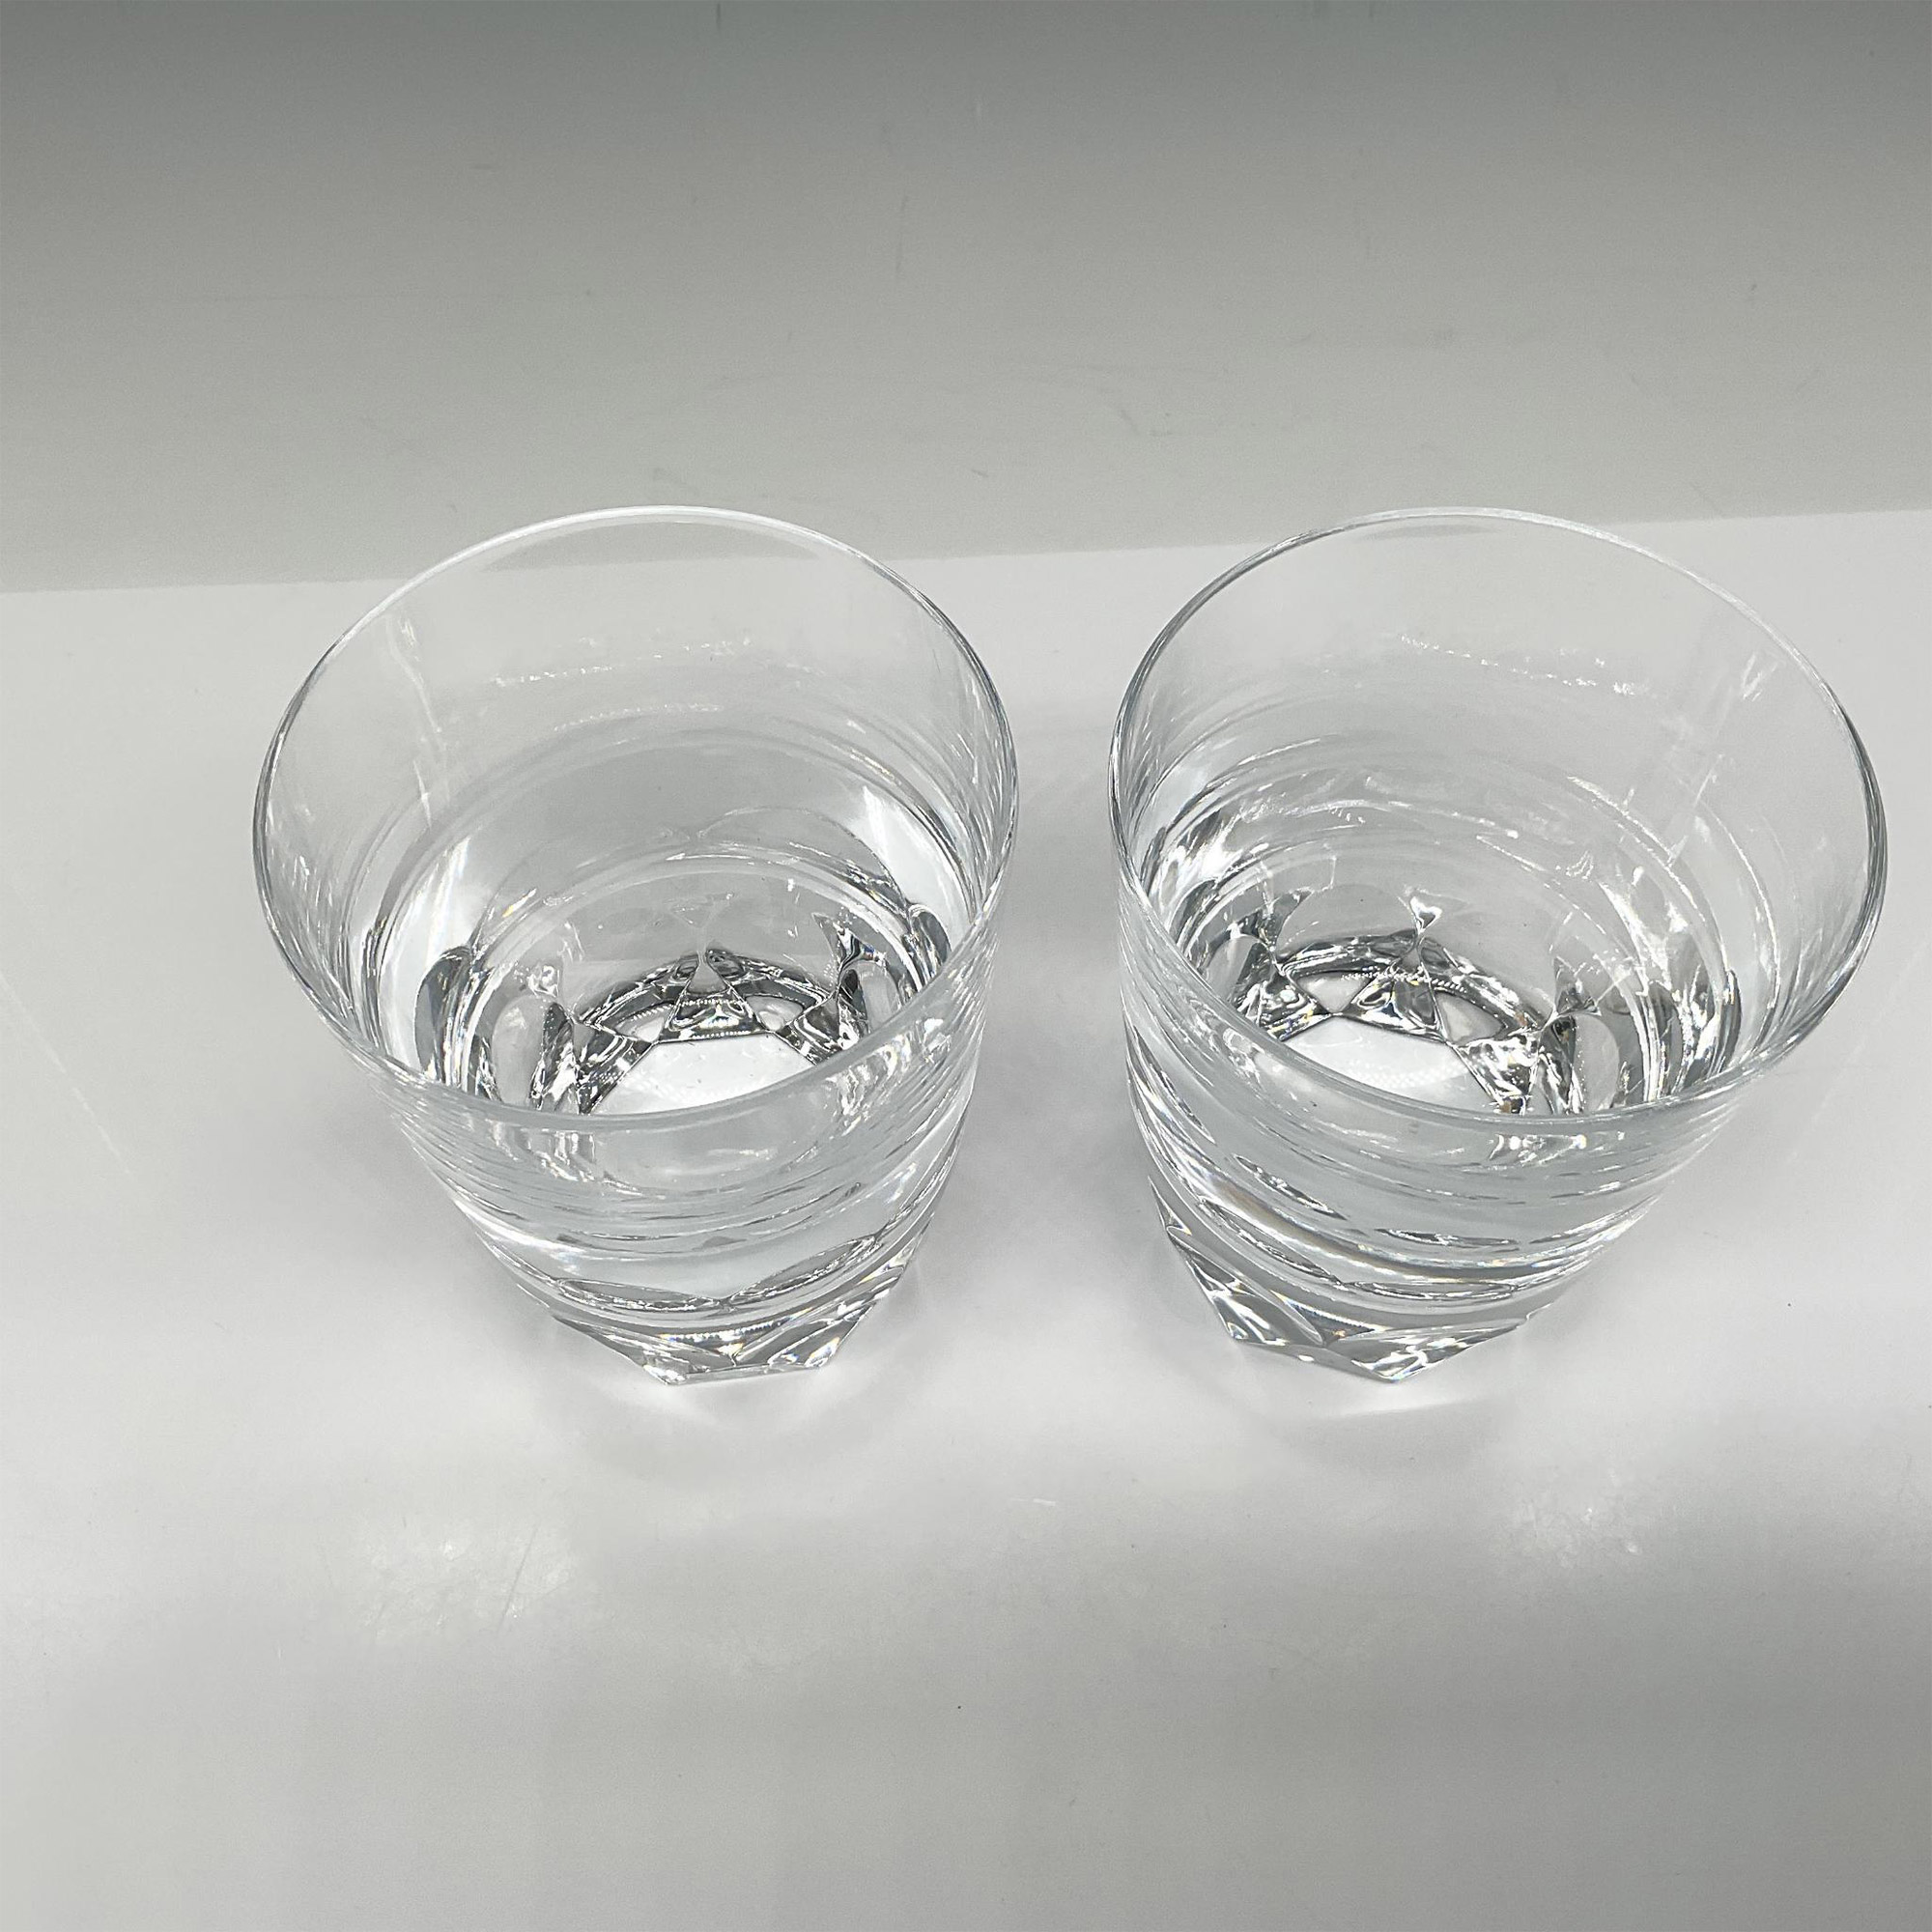 Orrefors Crystal Cocktail Glasses, Carat - Image 2 of 4